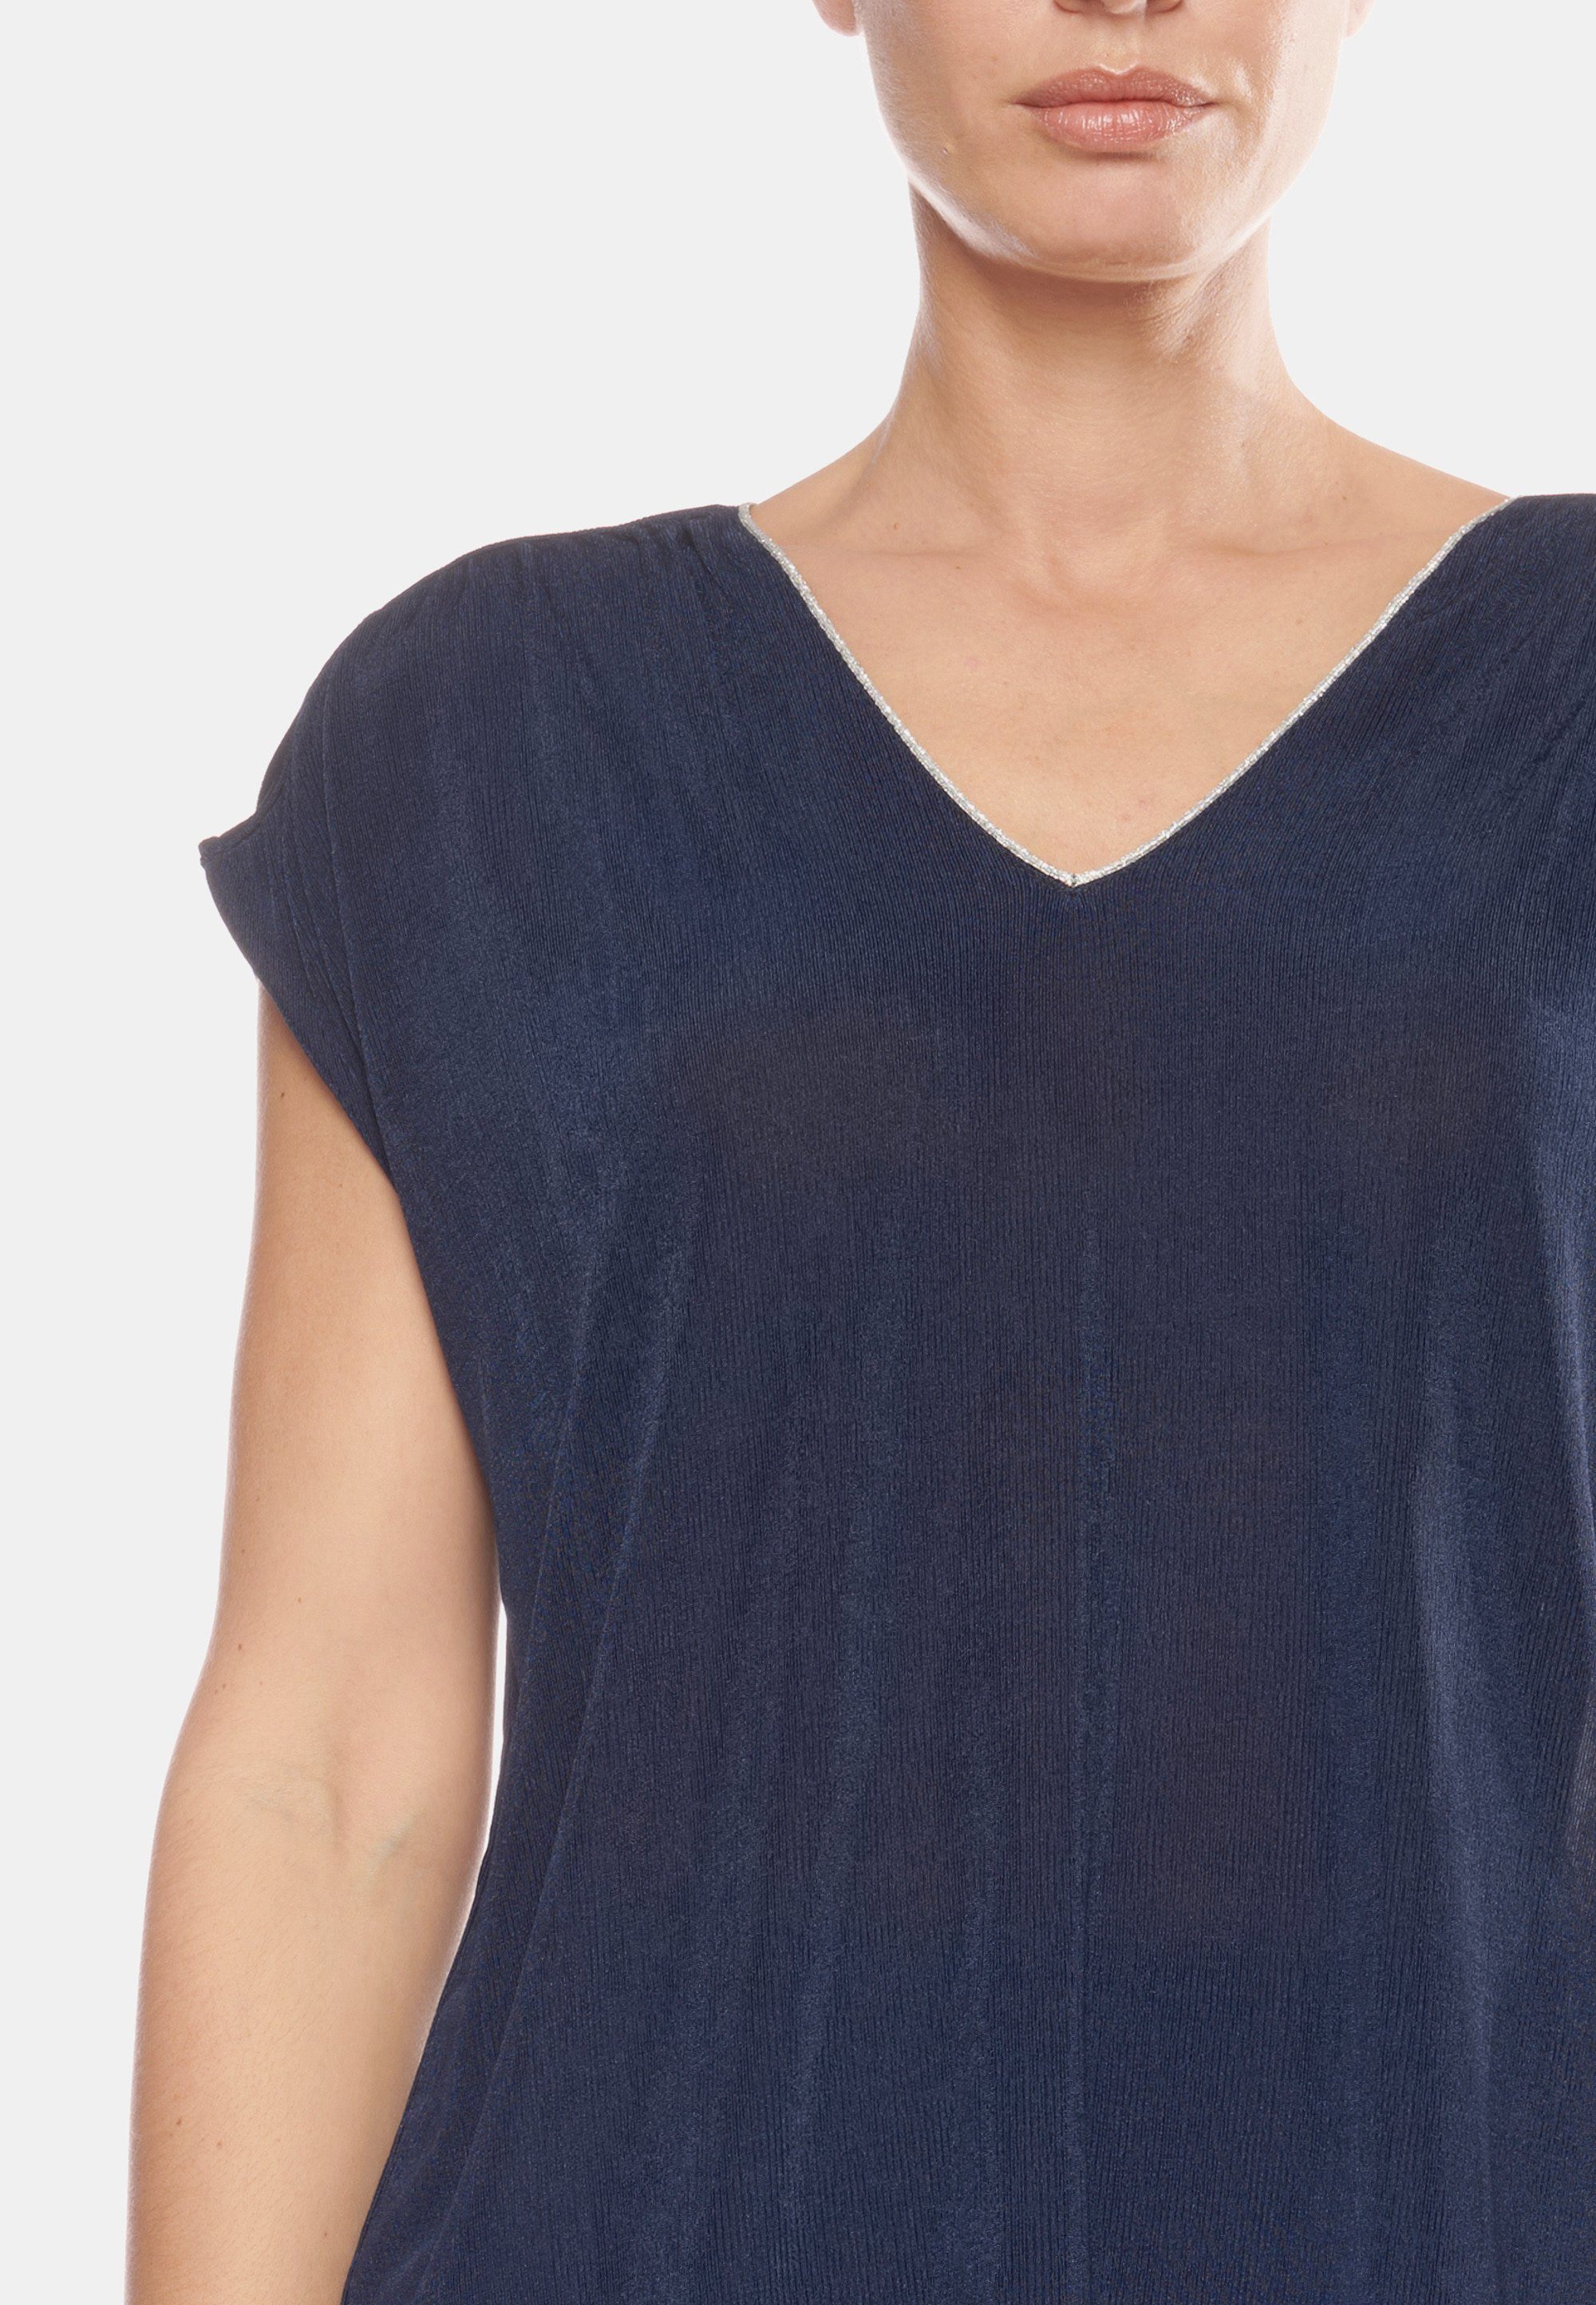 Le Temps V-Ausschnitt Des T-Shirt blau-dunkelblau Cerises SIDY femininem TSHIRT mit